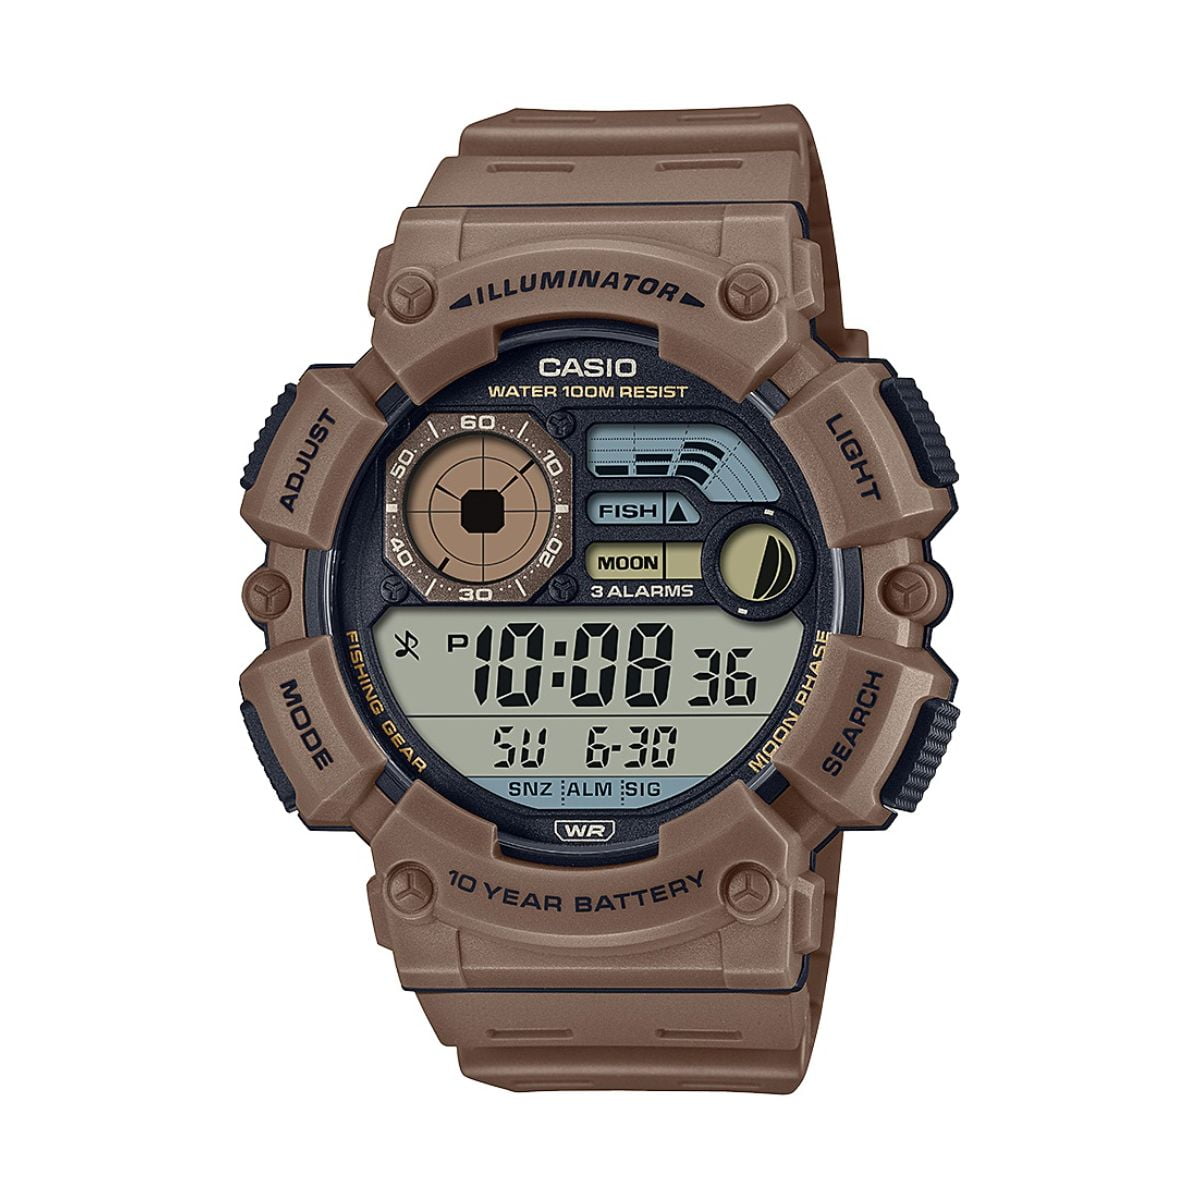 Casio Men's Fishing Timer Digital Watch, Tan - WS-1500H-5AV Walmart.com